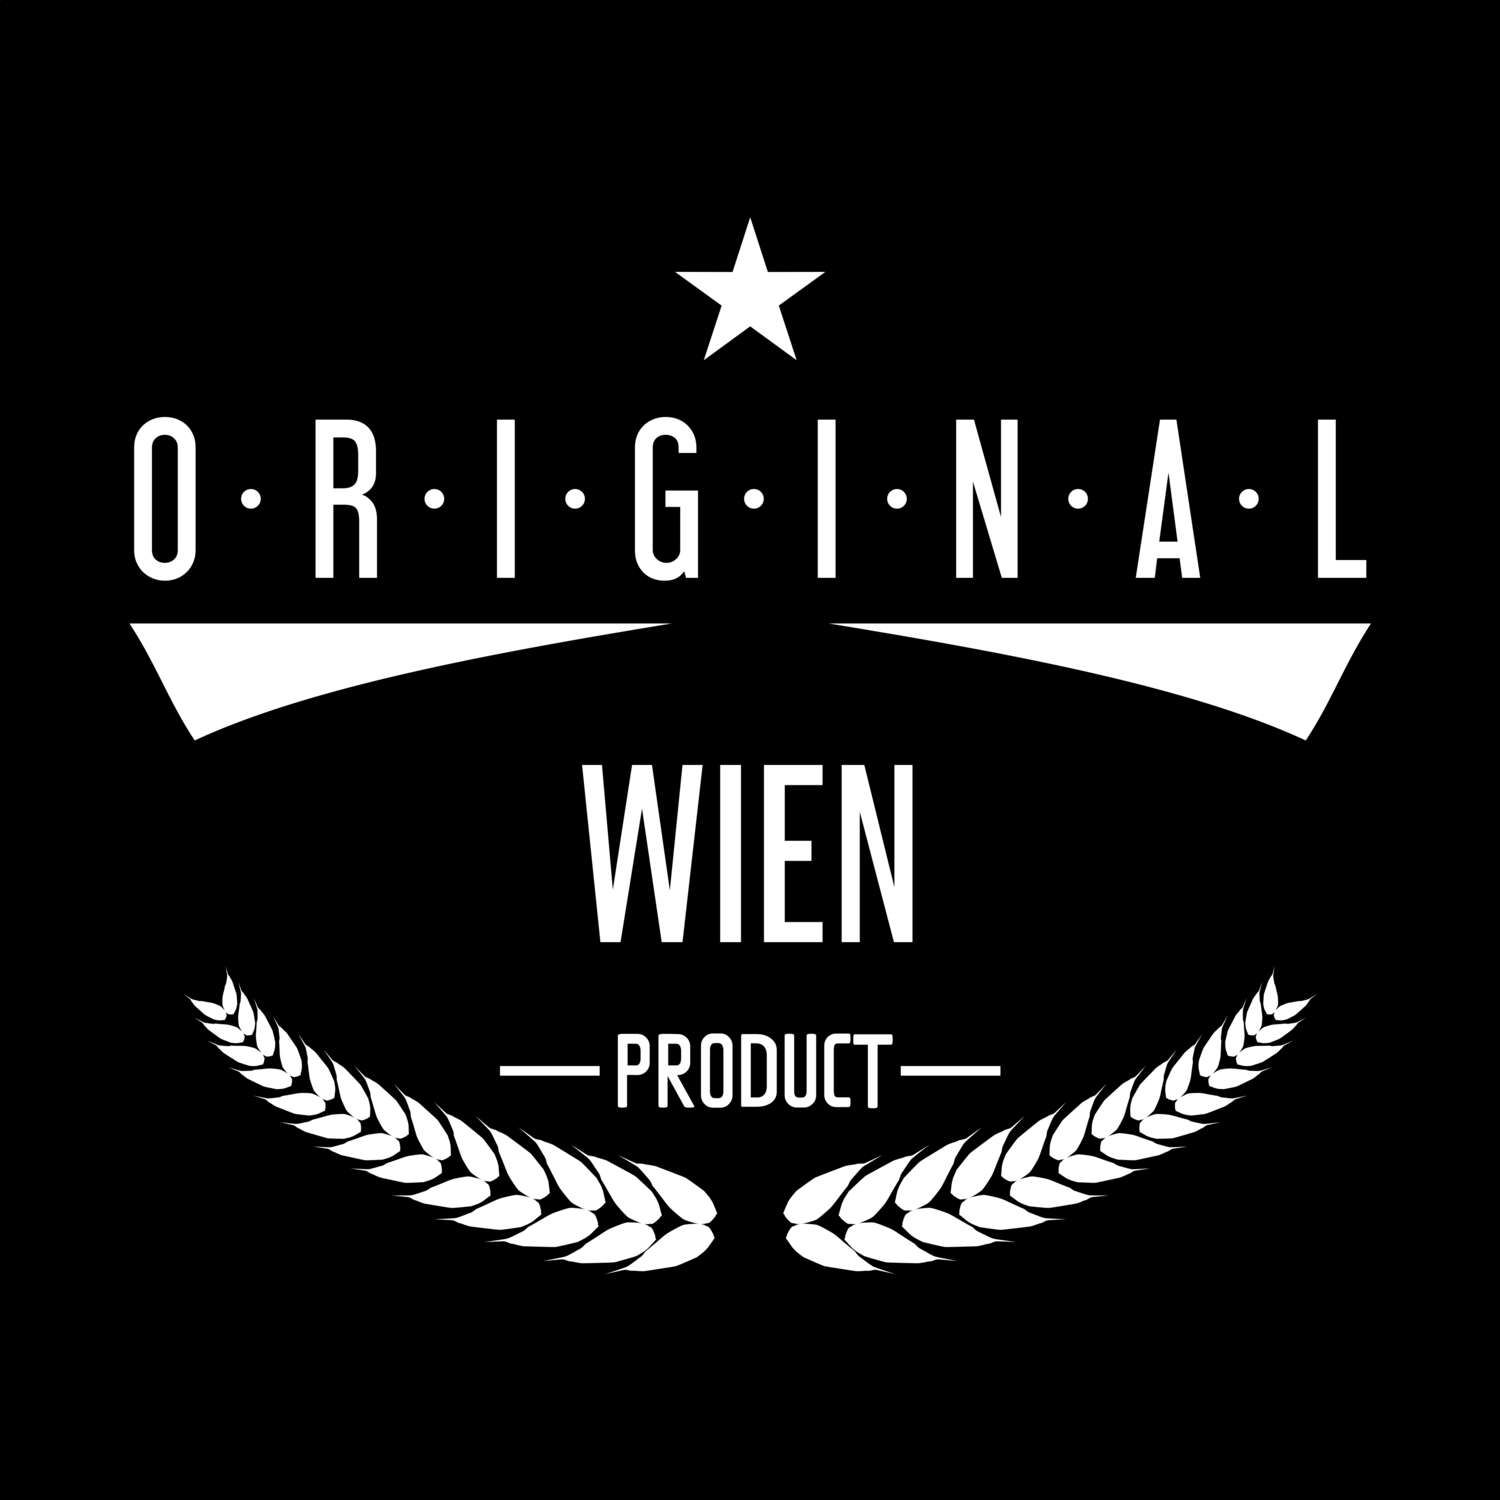 Wien T-Shirt »Original Product«